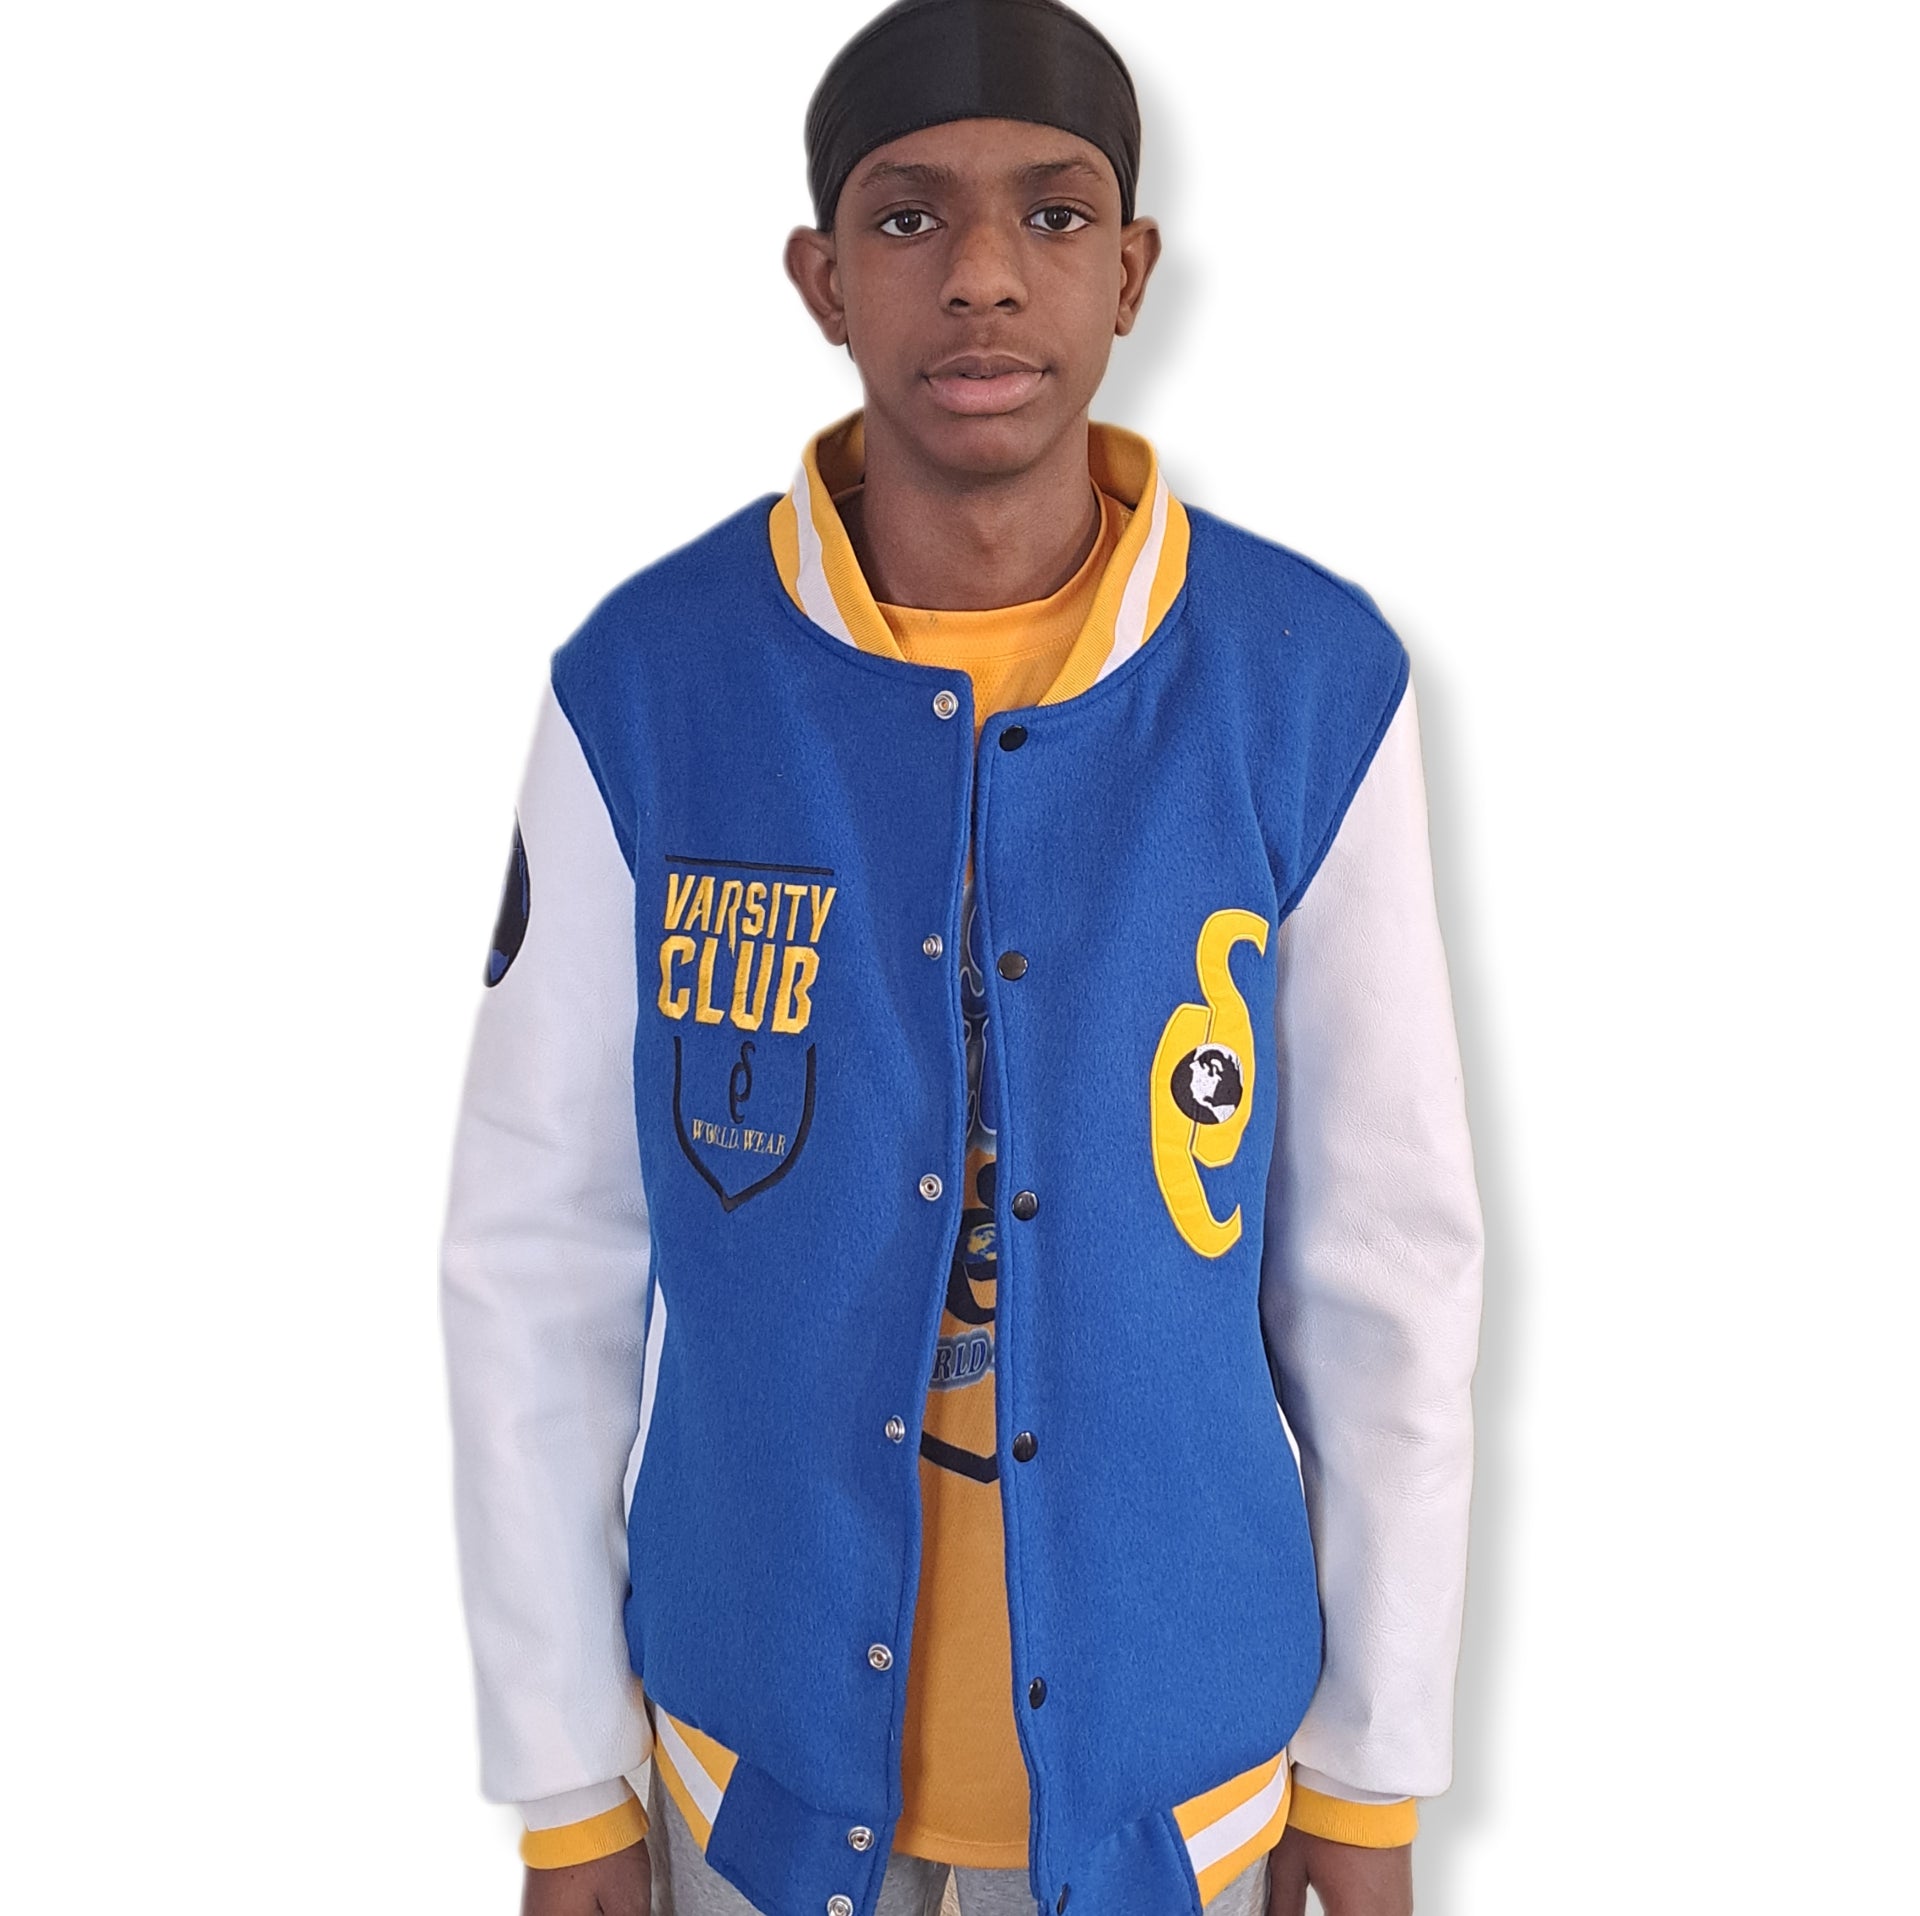 Varsity Club Blue/White/Yellow Lettermen's Varsity Jacket. - SPEED OF CHOICE® 